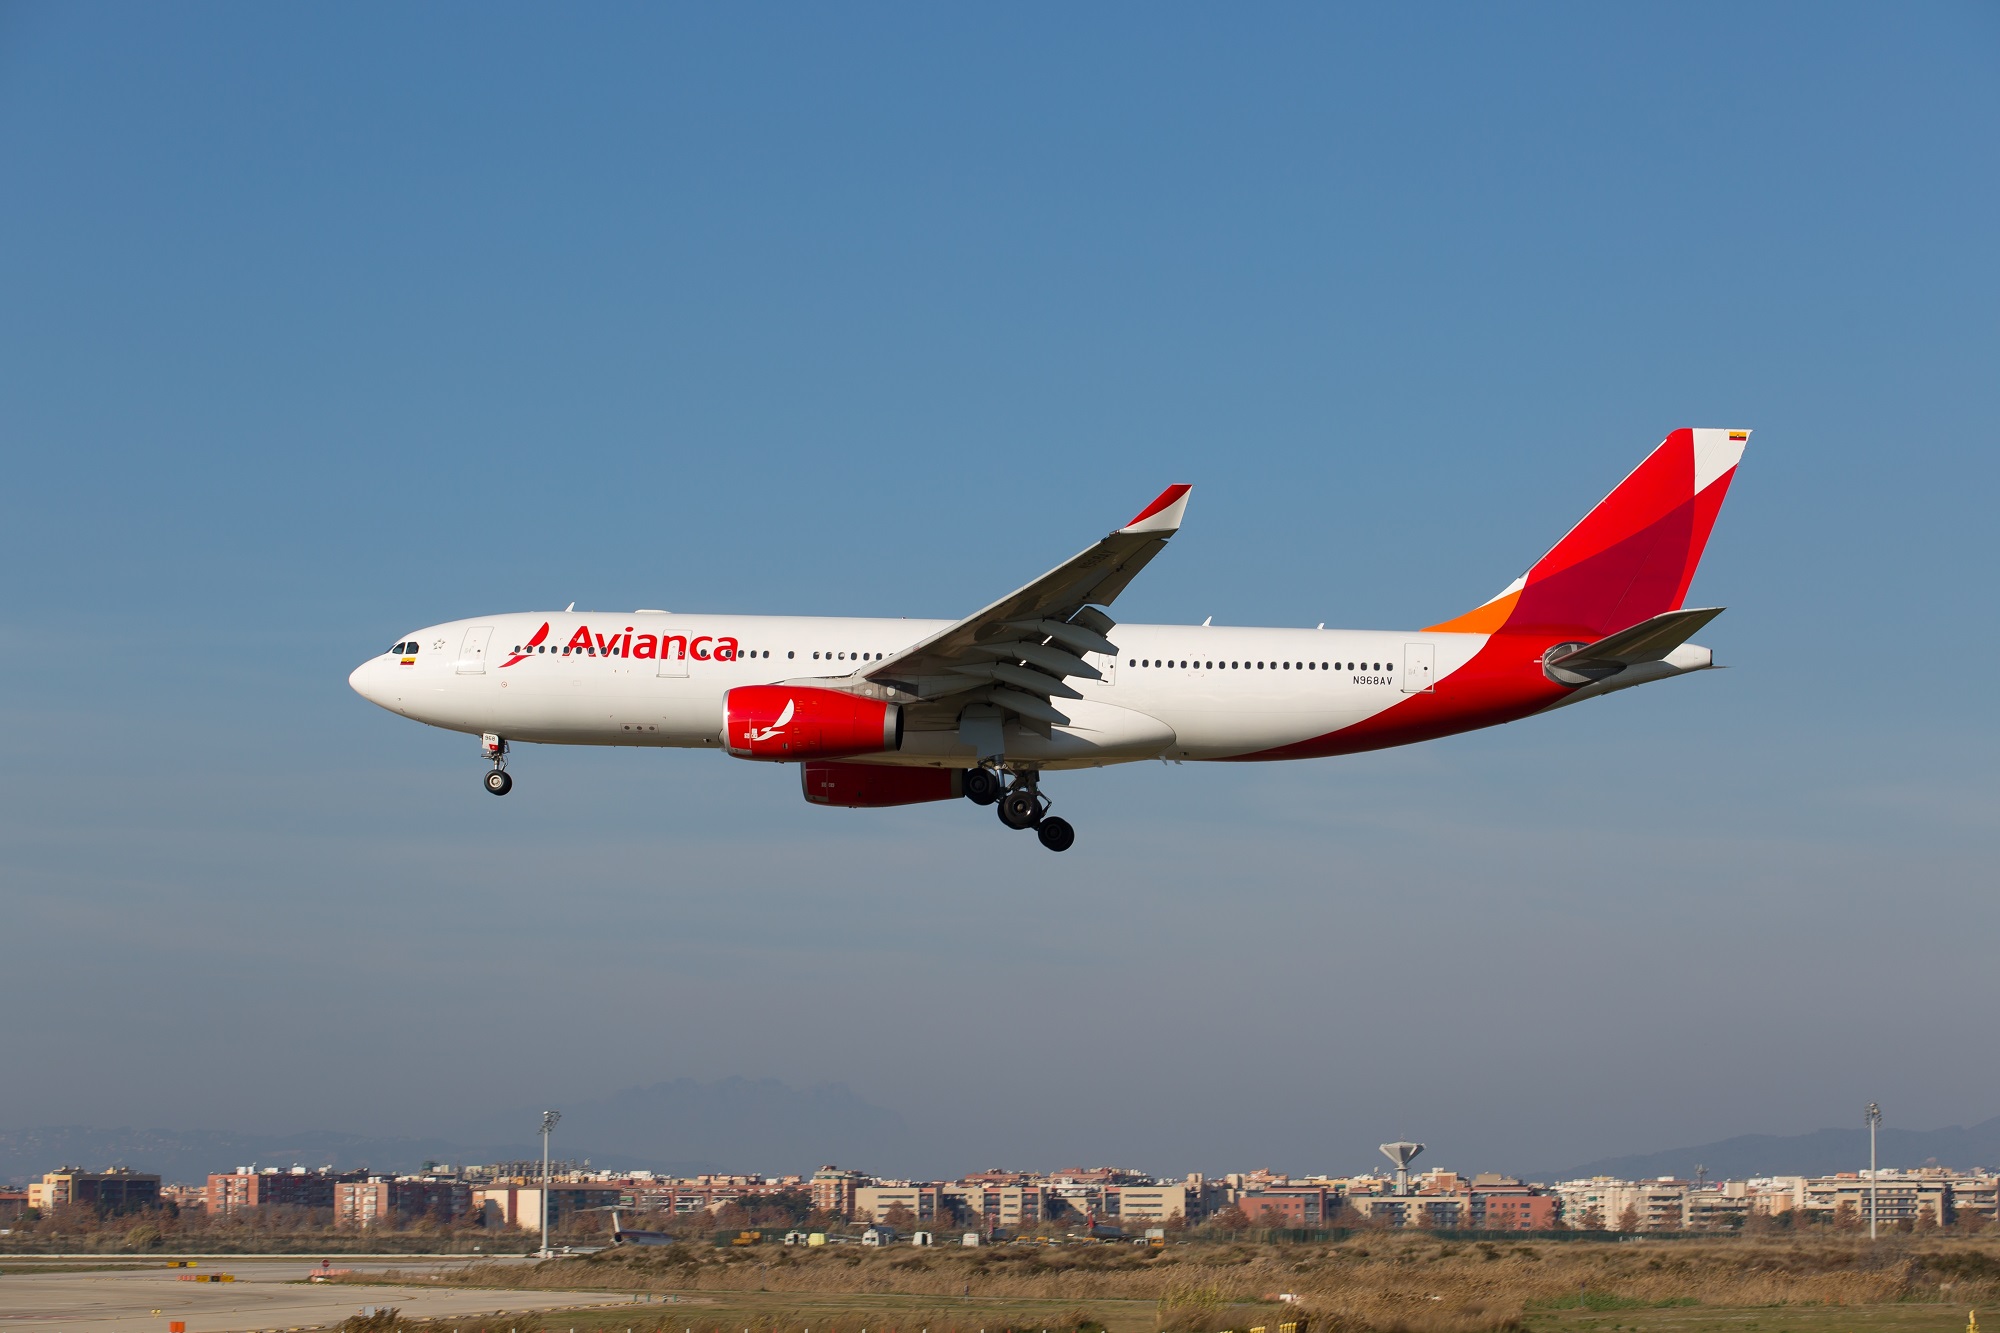 firma Absolutamente pedestal Avianca says adiós to its passenger Airbus A330 fleet - AeroTime